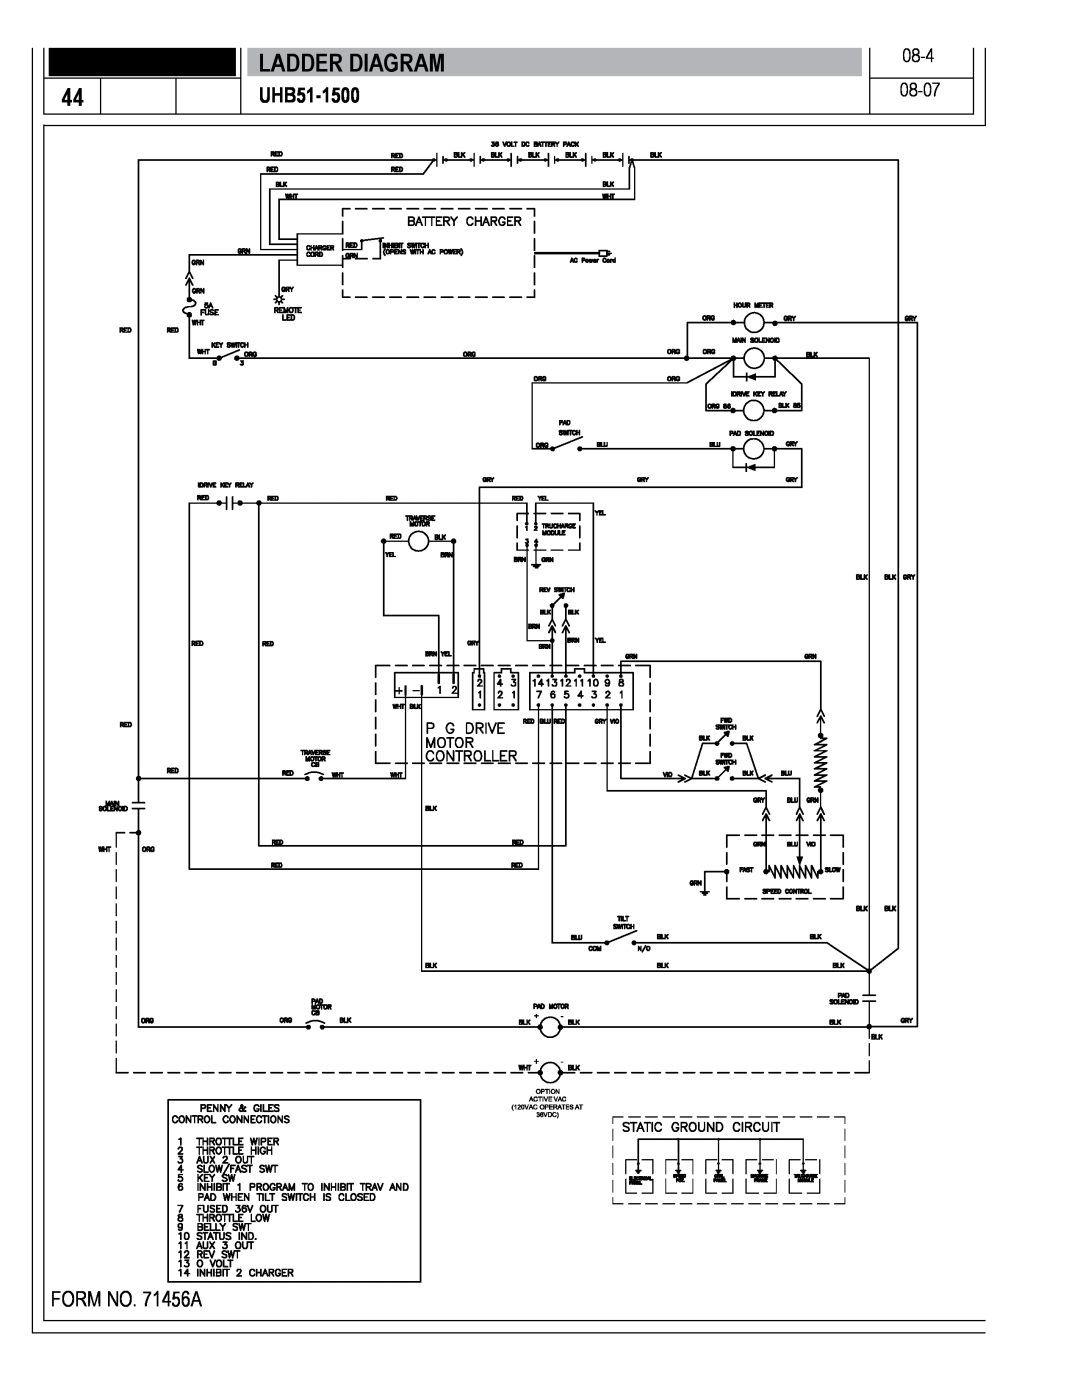 Nilfisk-Advance America 01610A manual Ladder Diagram, UHB51-1500, FORM NO. 71456A, 08-4, 08-07 